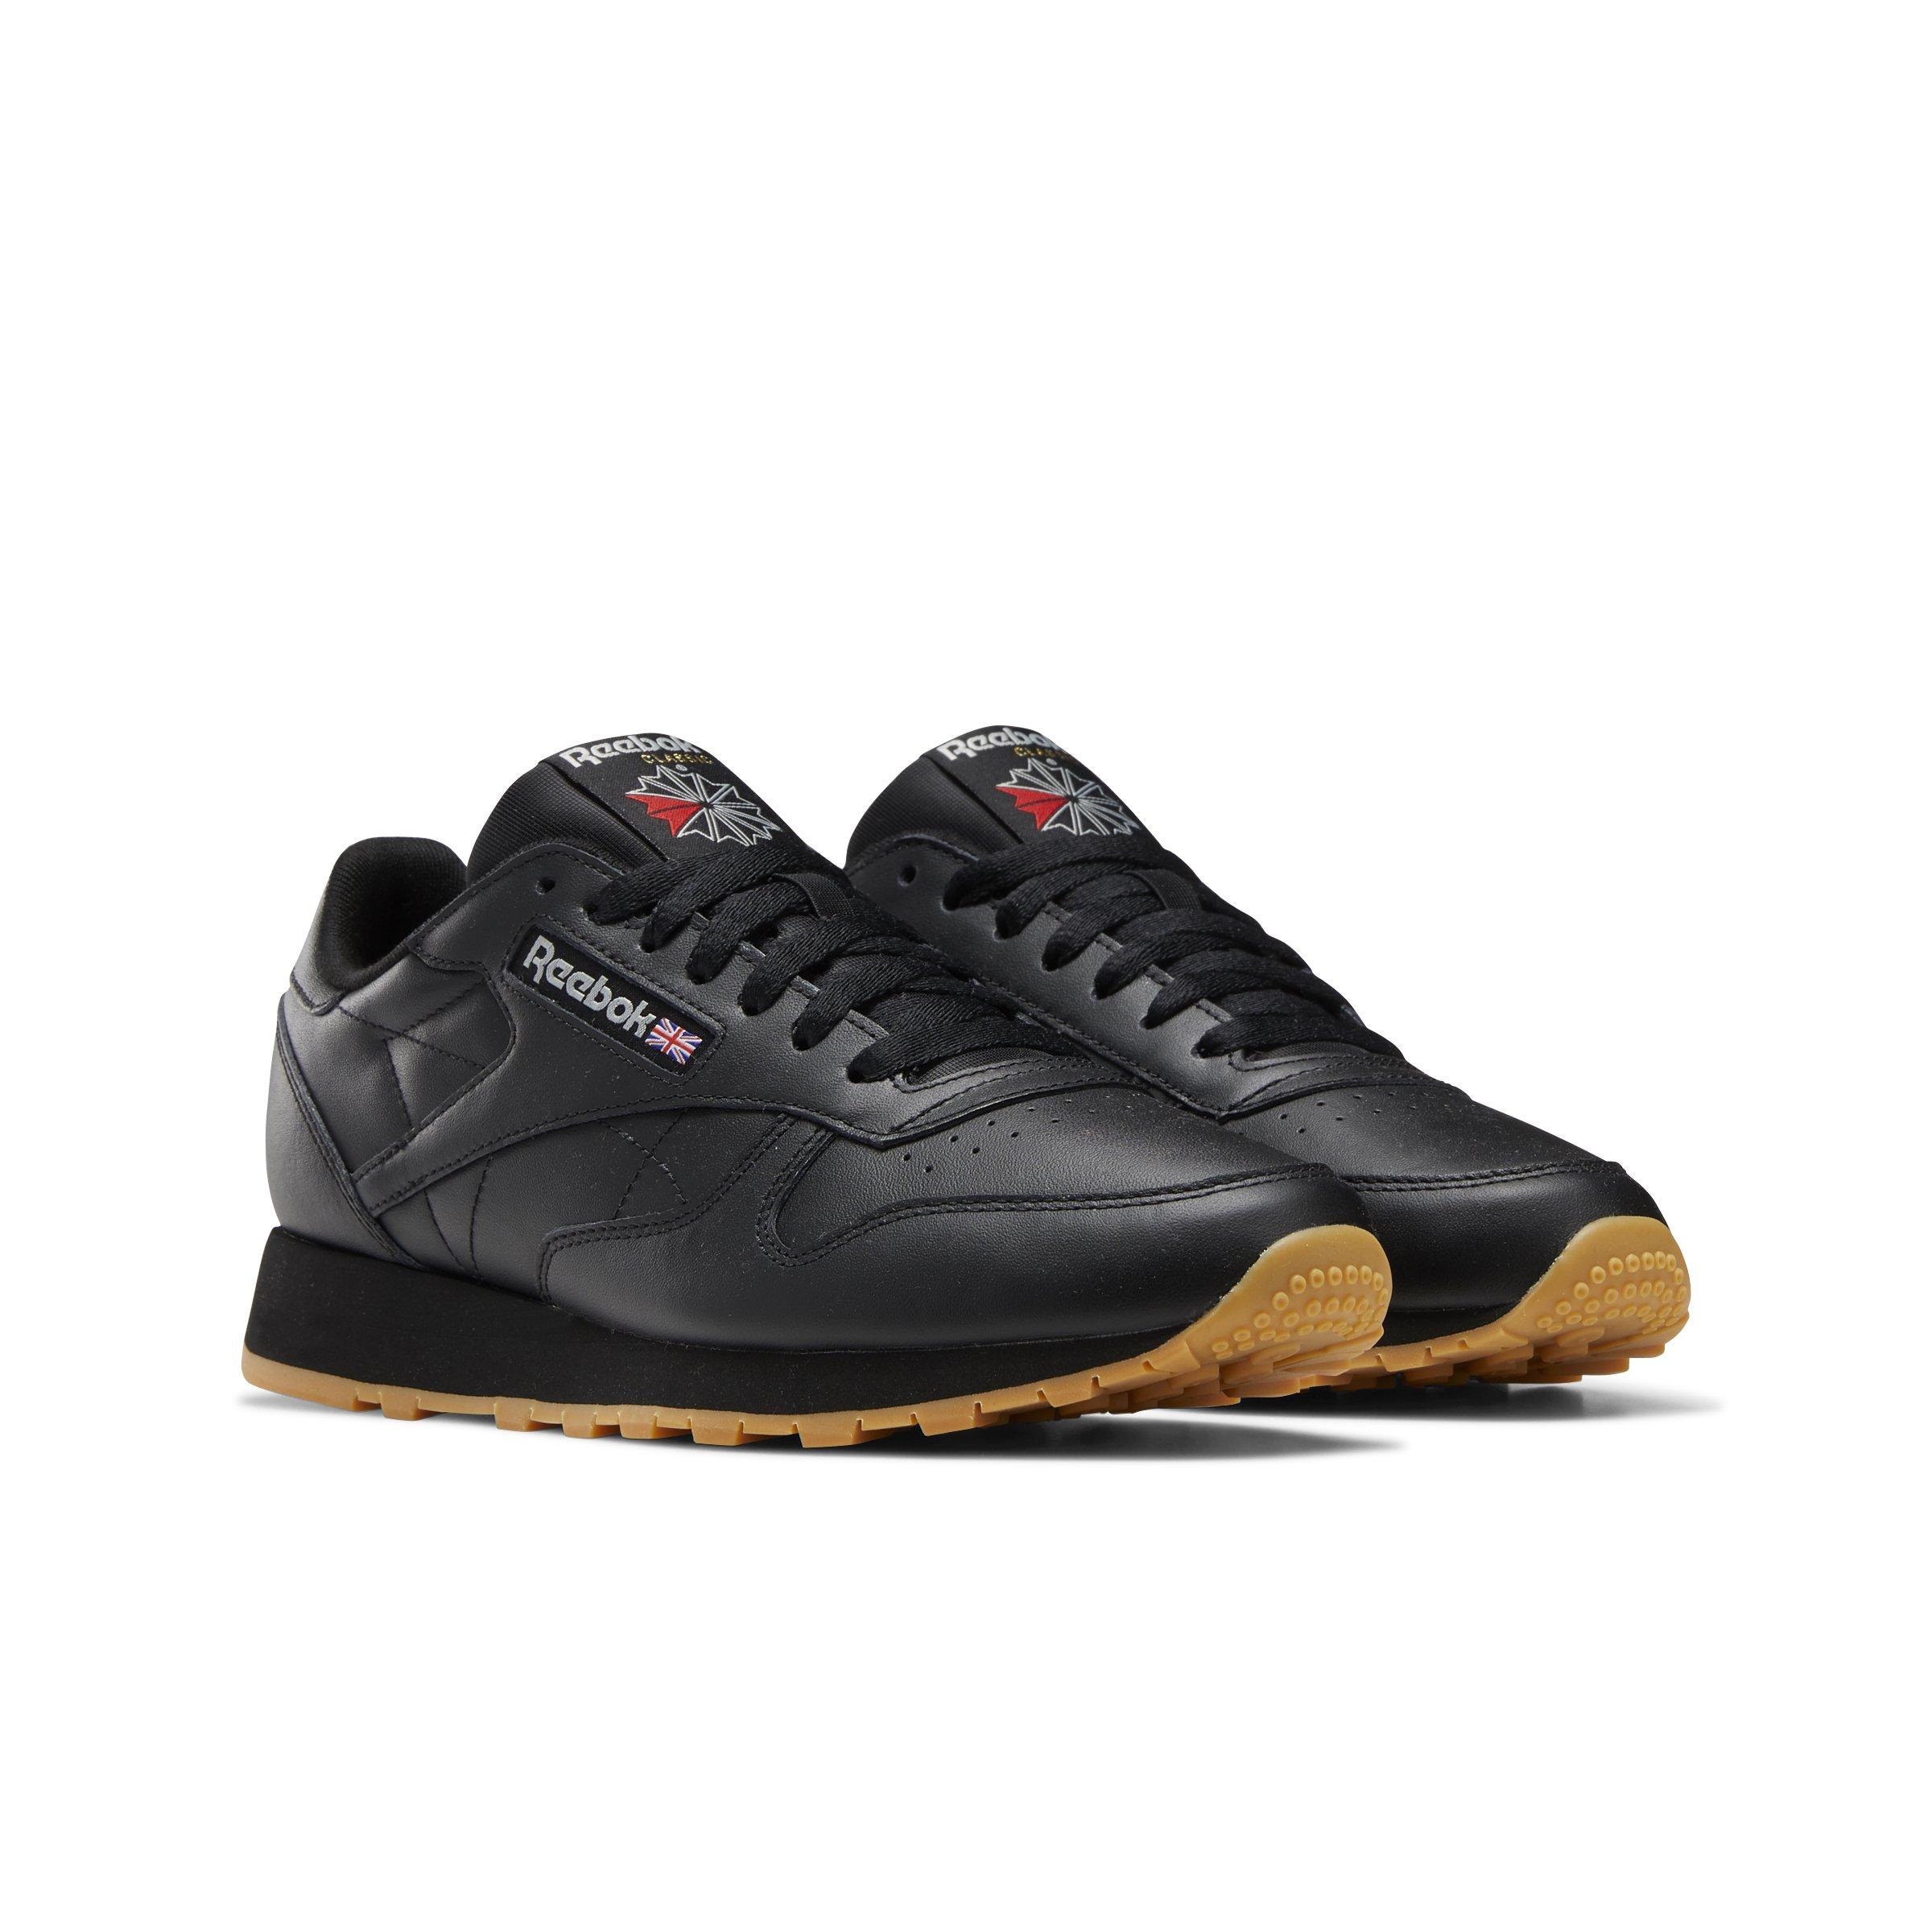 Classic Leather "Black/Gum" Men's Shoe